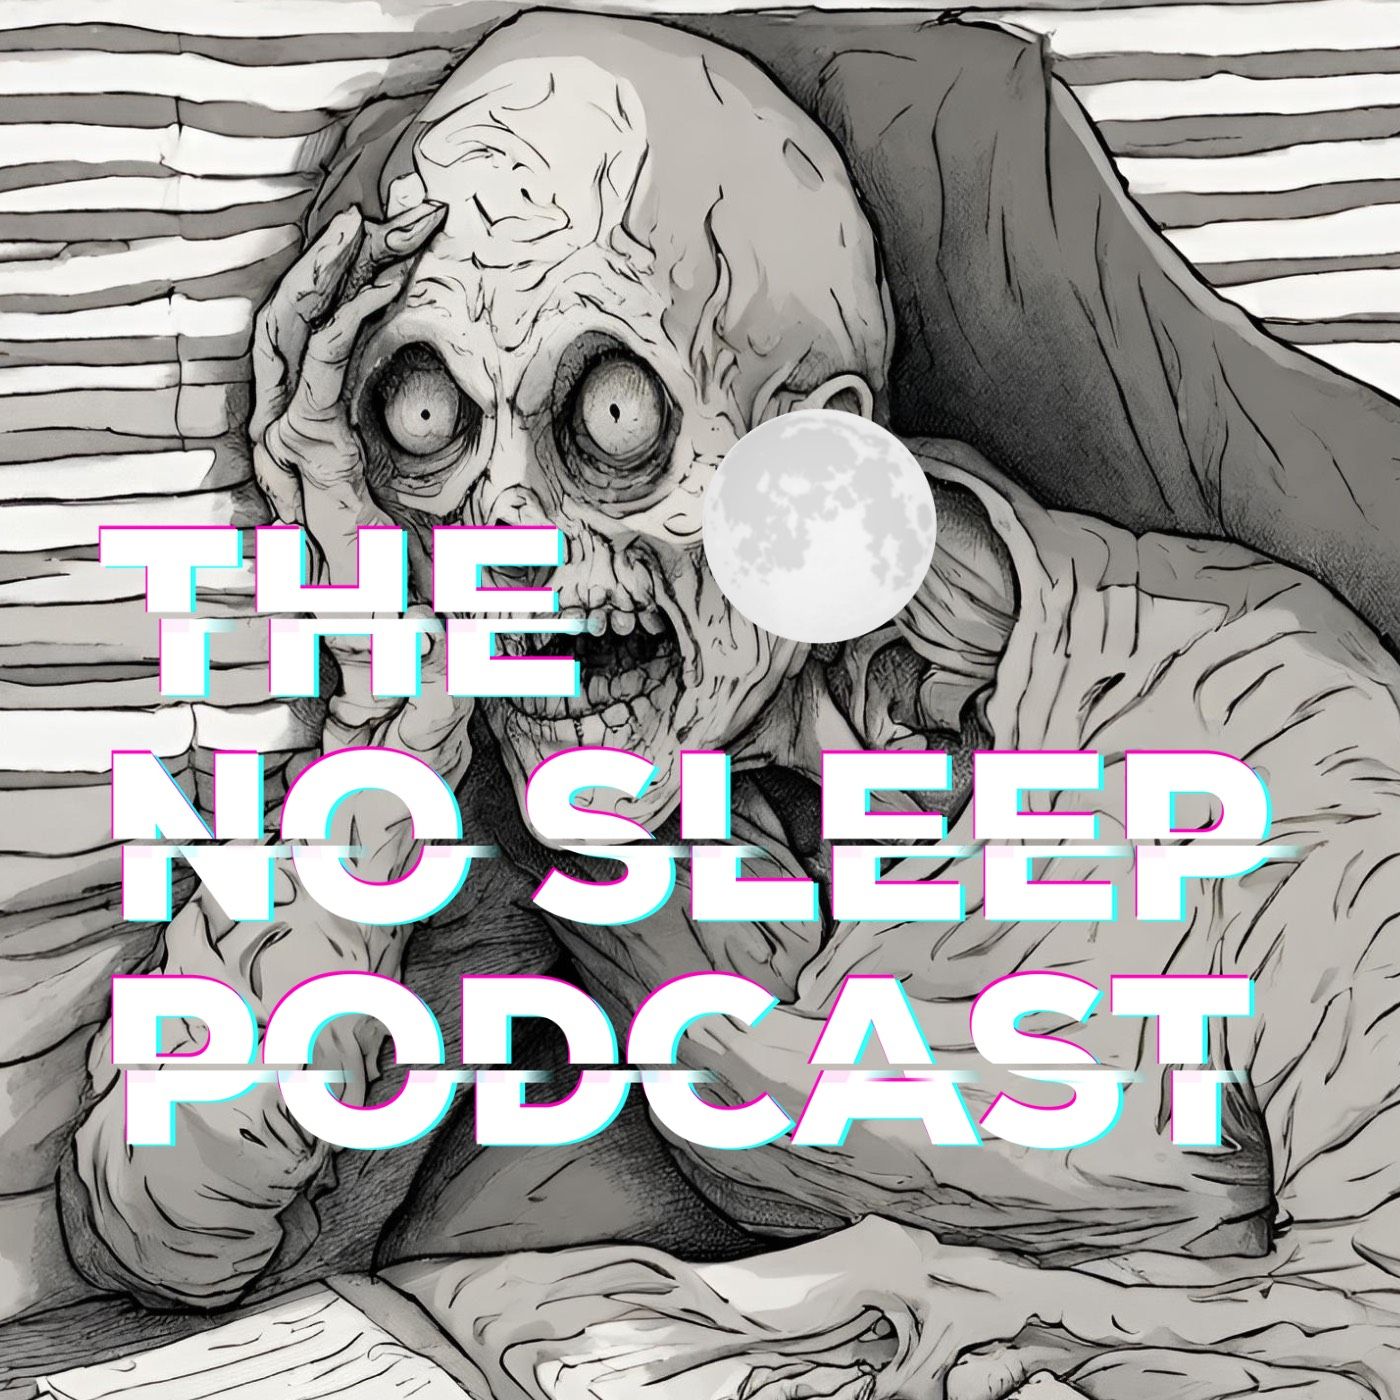 S20: NoSleep Podcast Halloween Hangover 2023